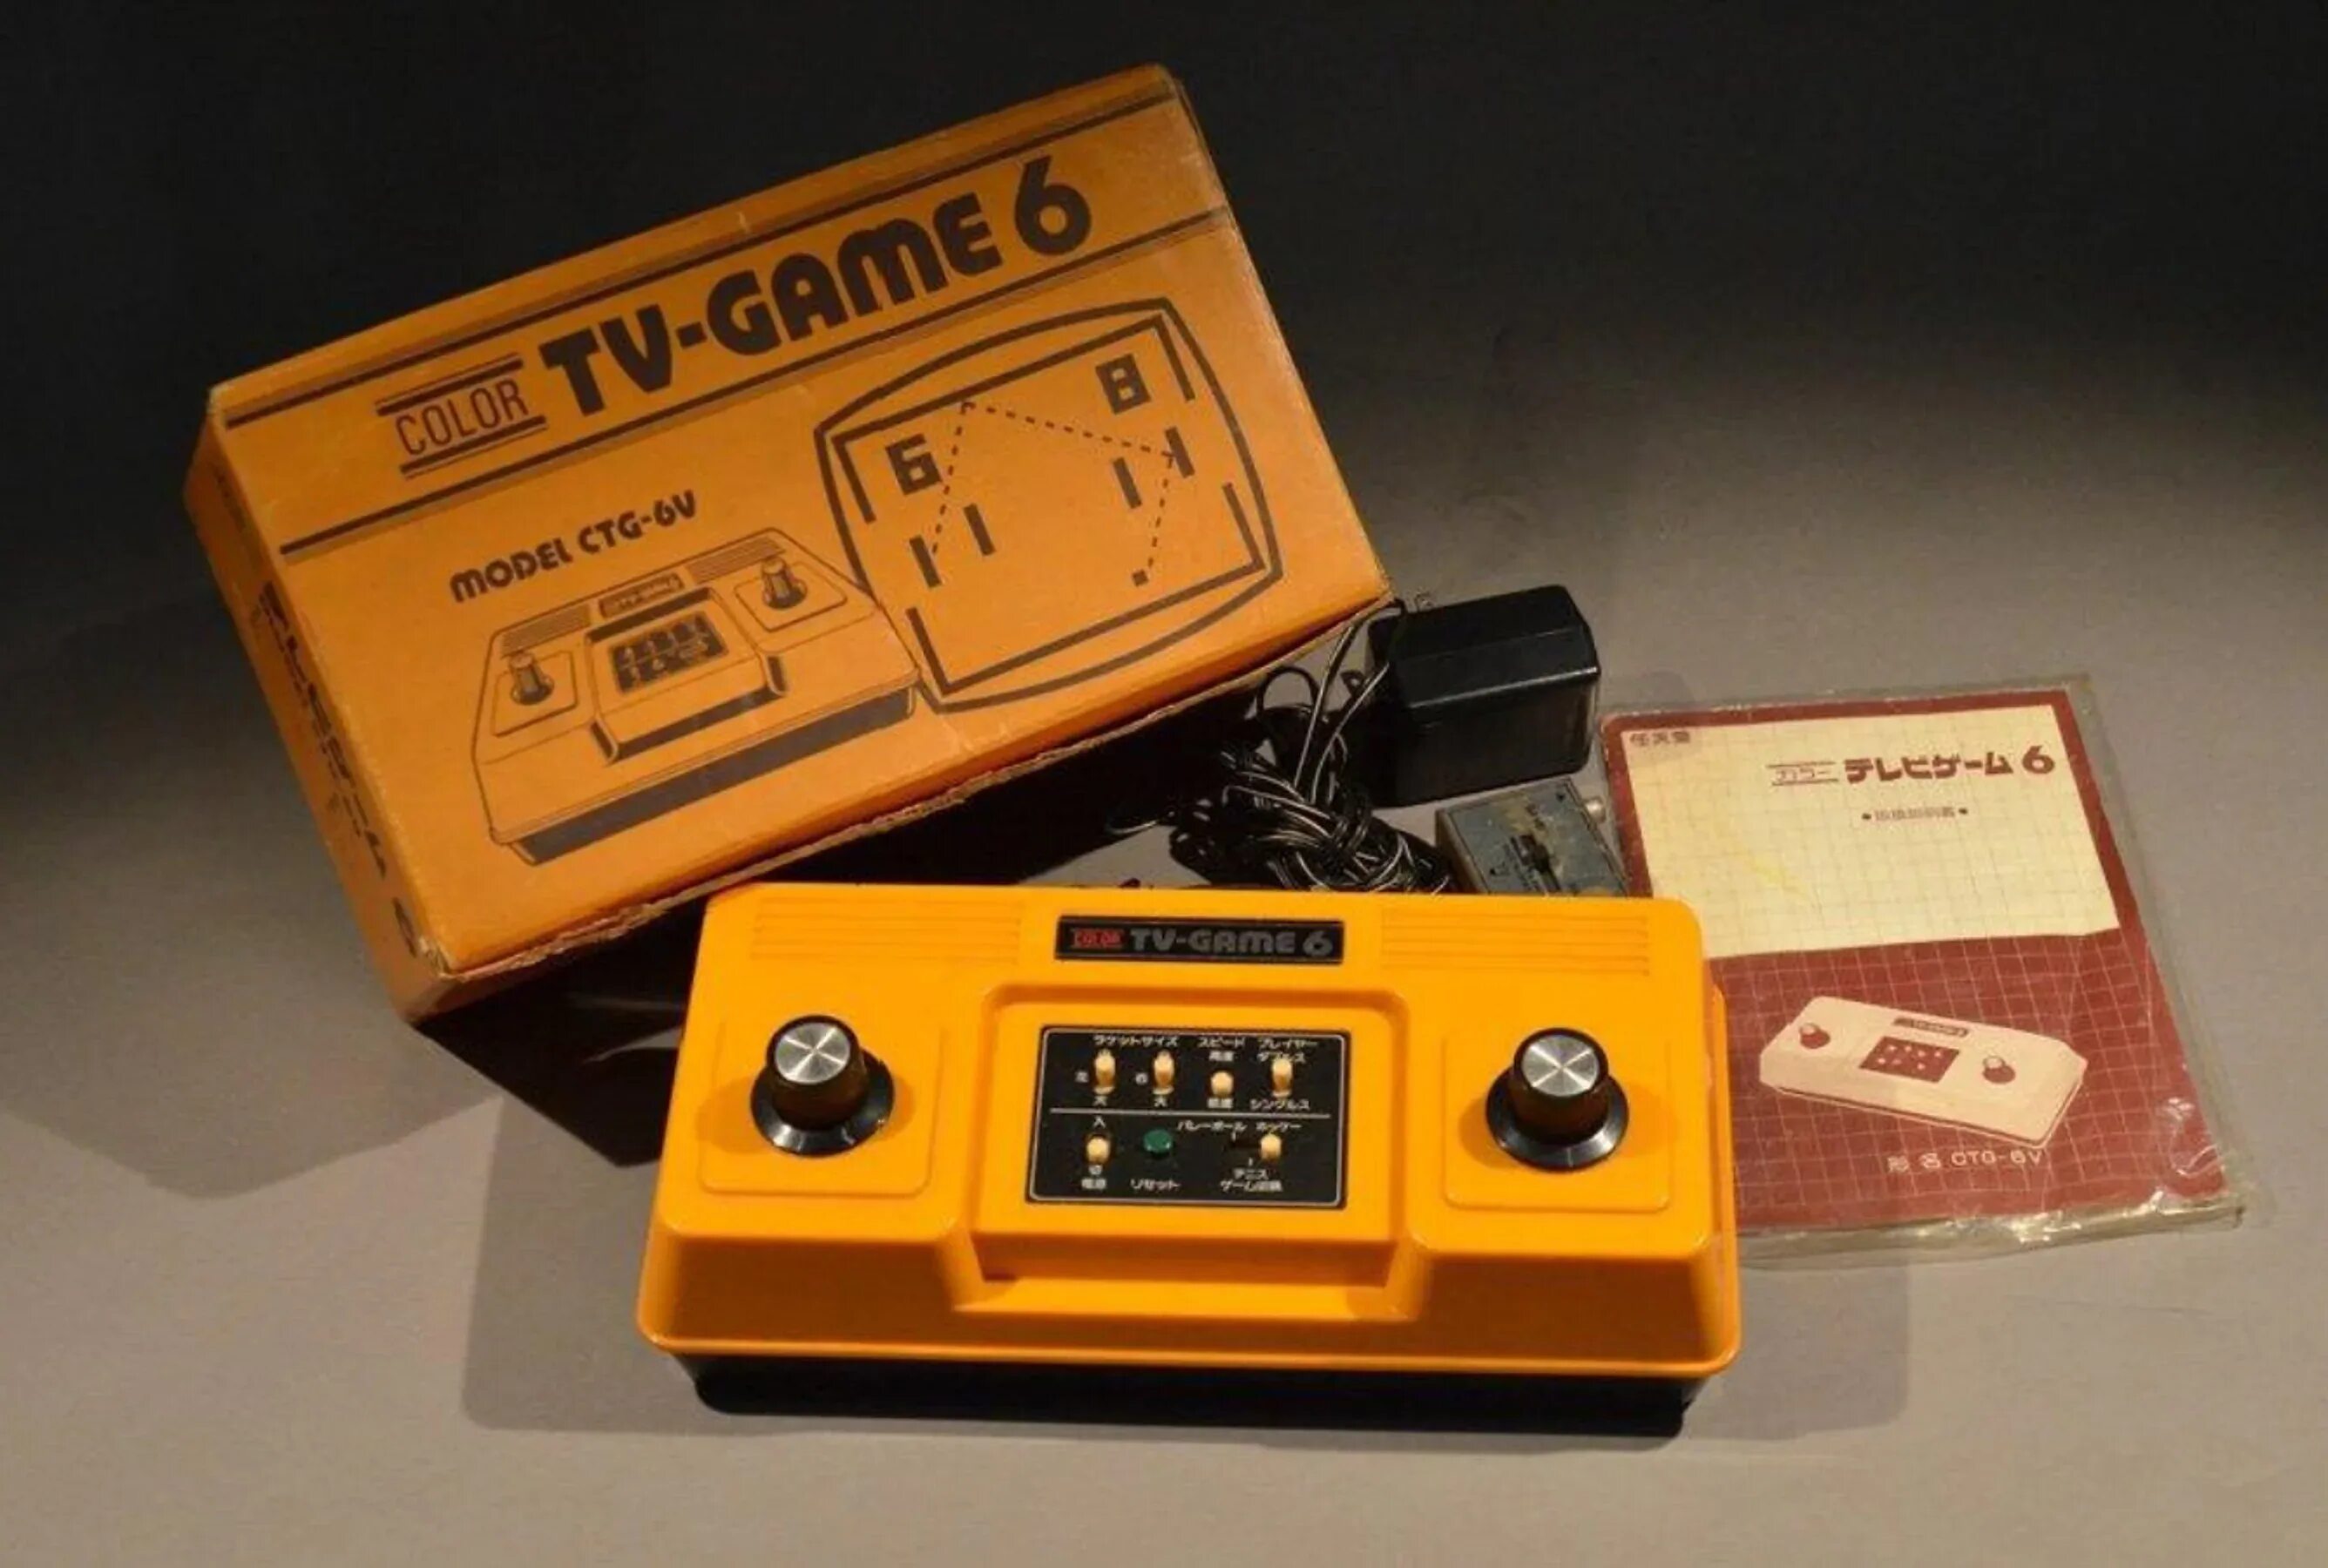 Нинтендо Color TV game игры. TV-game 6 Nintendo. Nintendo TV Computer 1977. Color TV game 6.